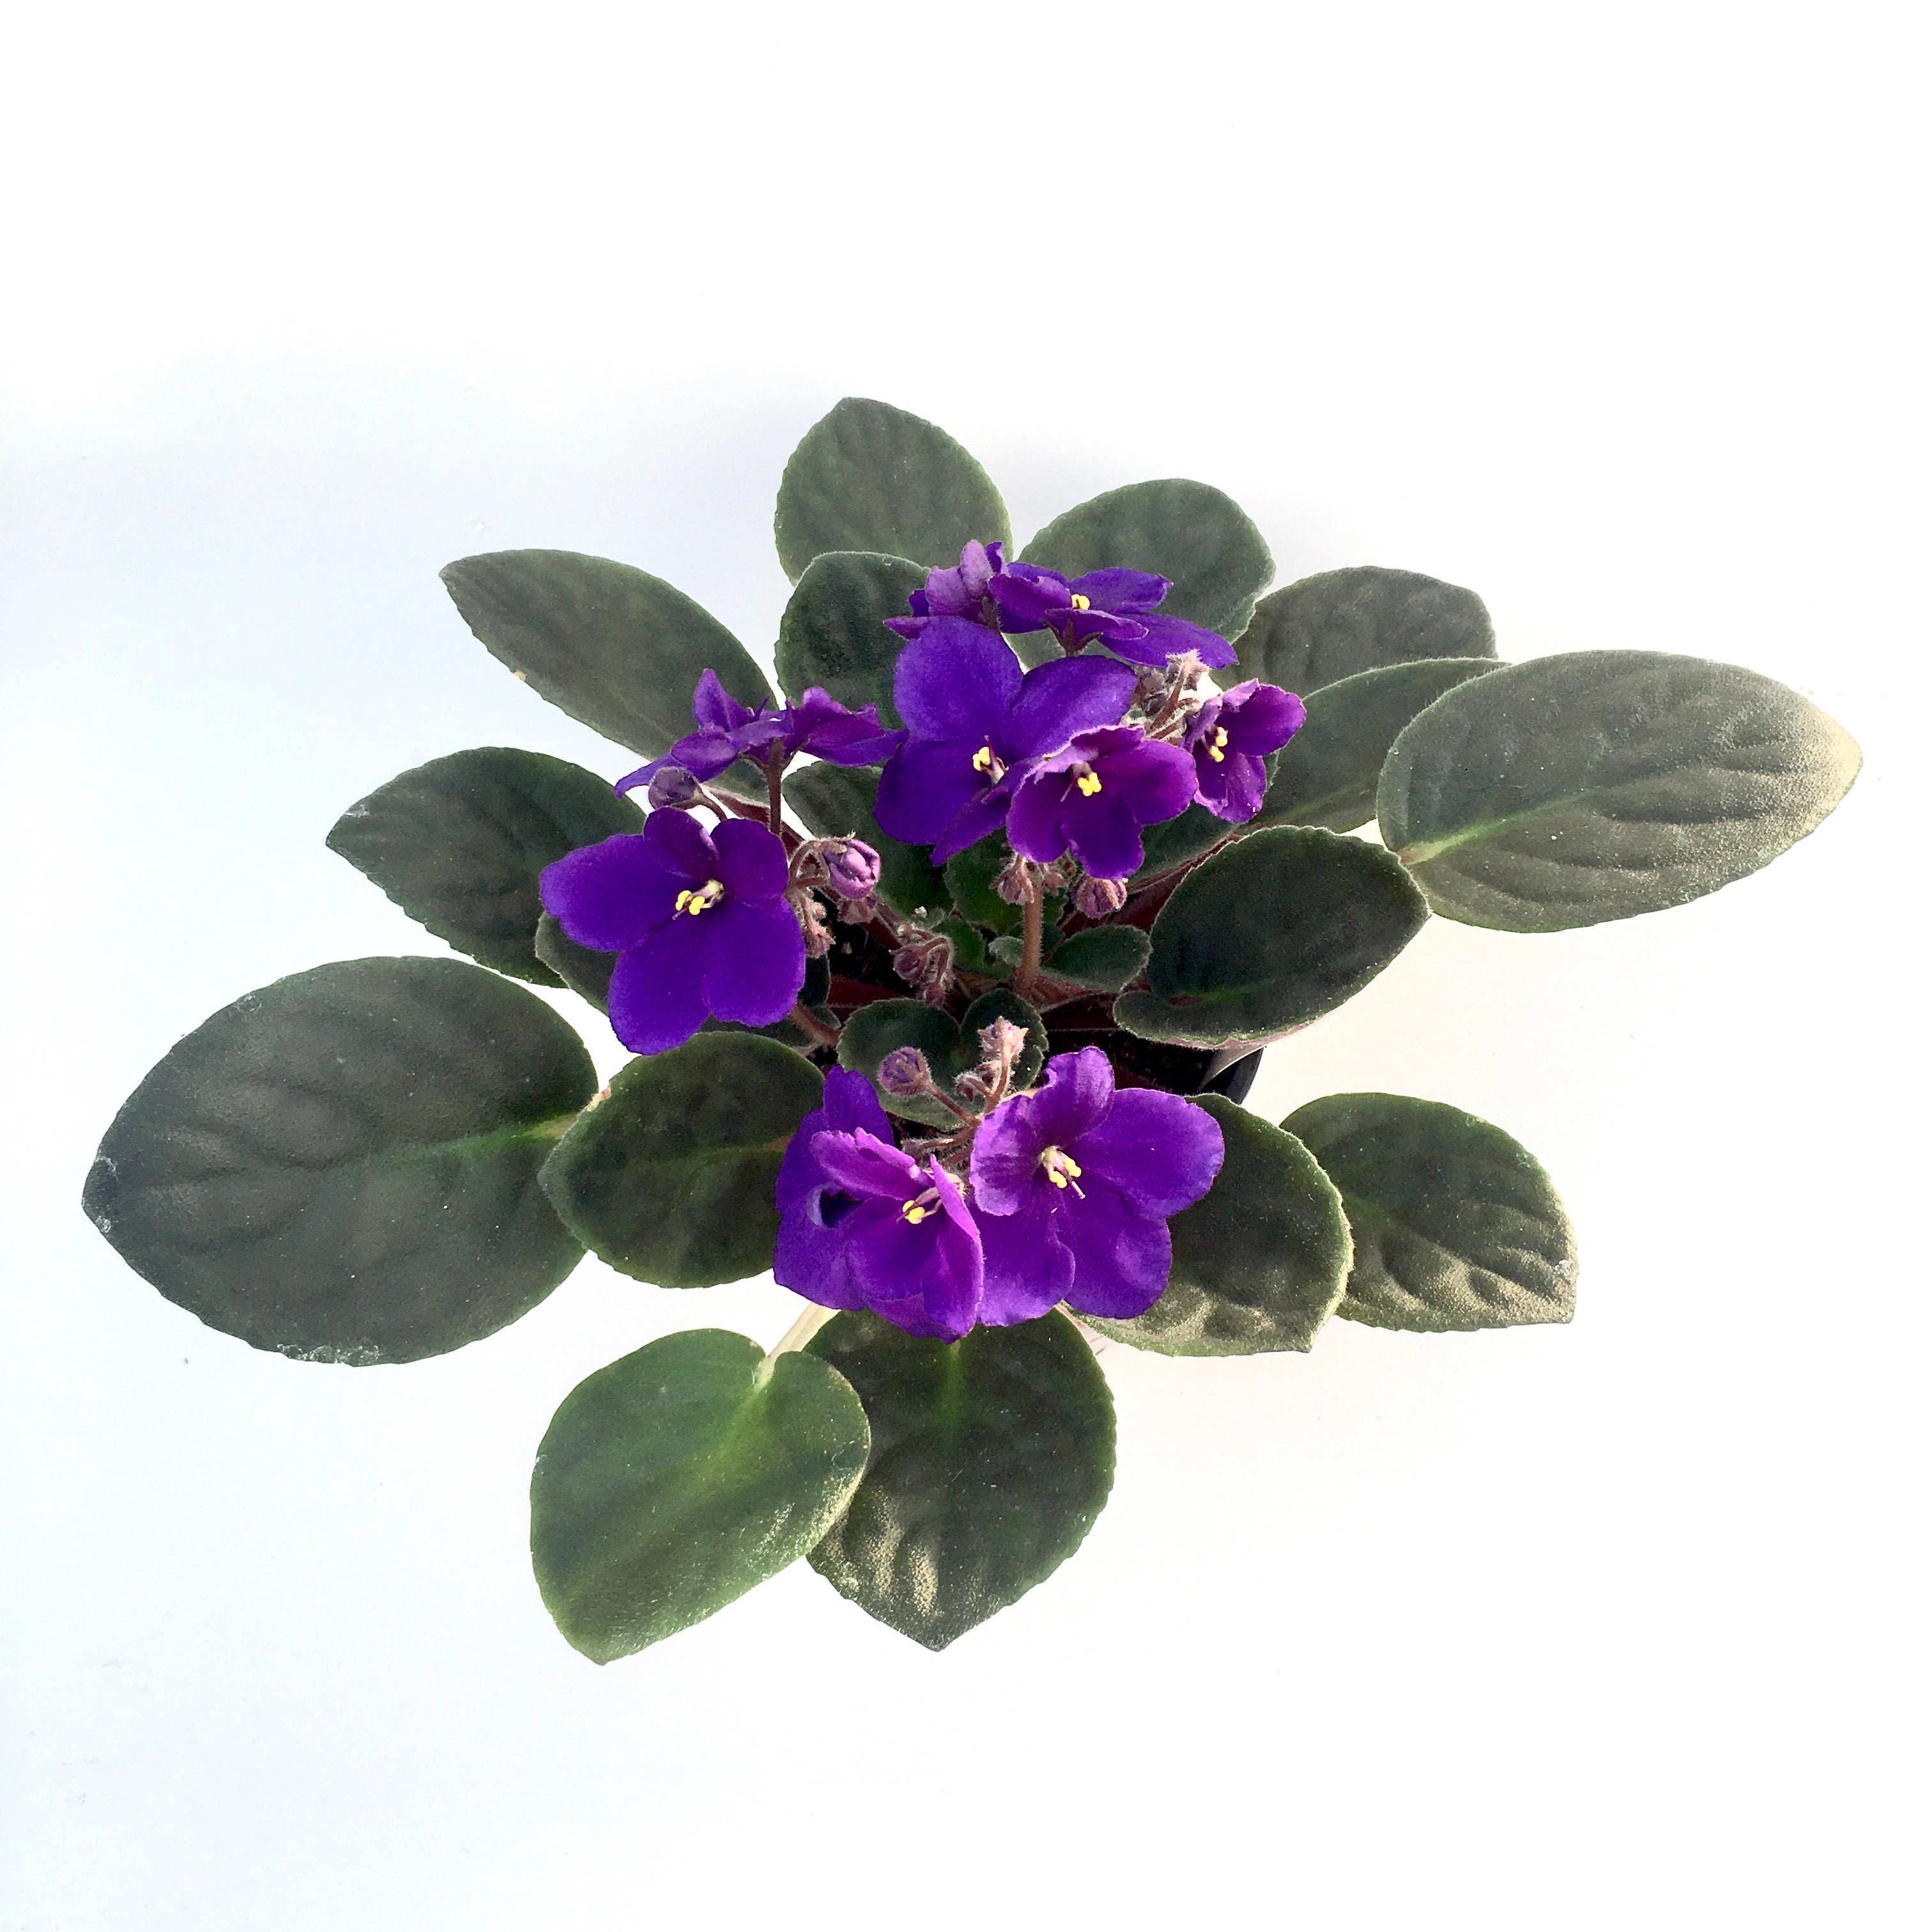 Streptocarpus sect. Saintpaulia - African Violet (Assorted Colors)